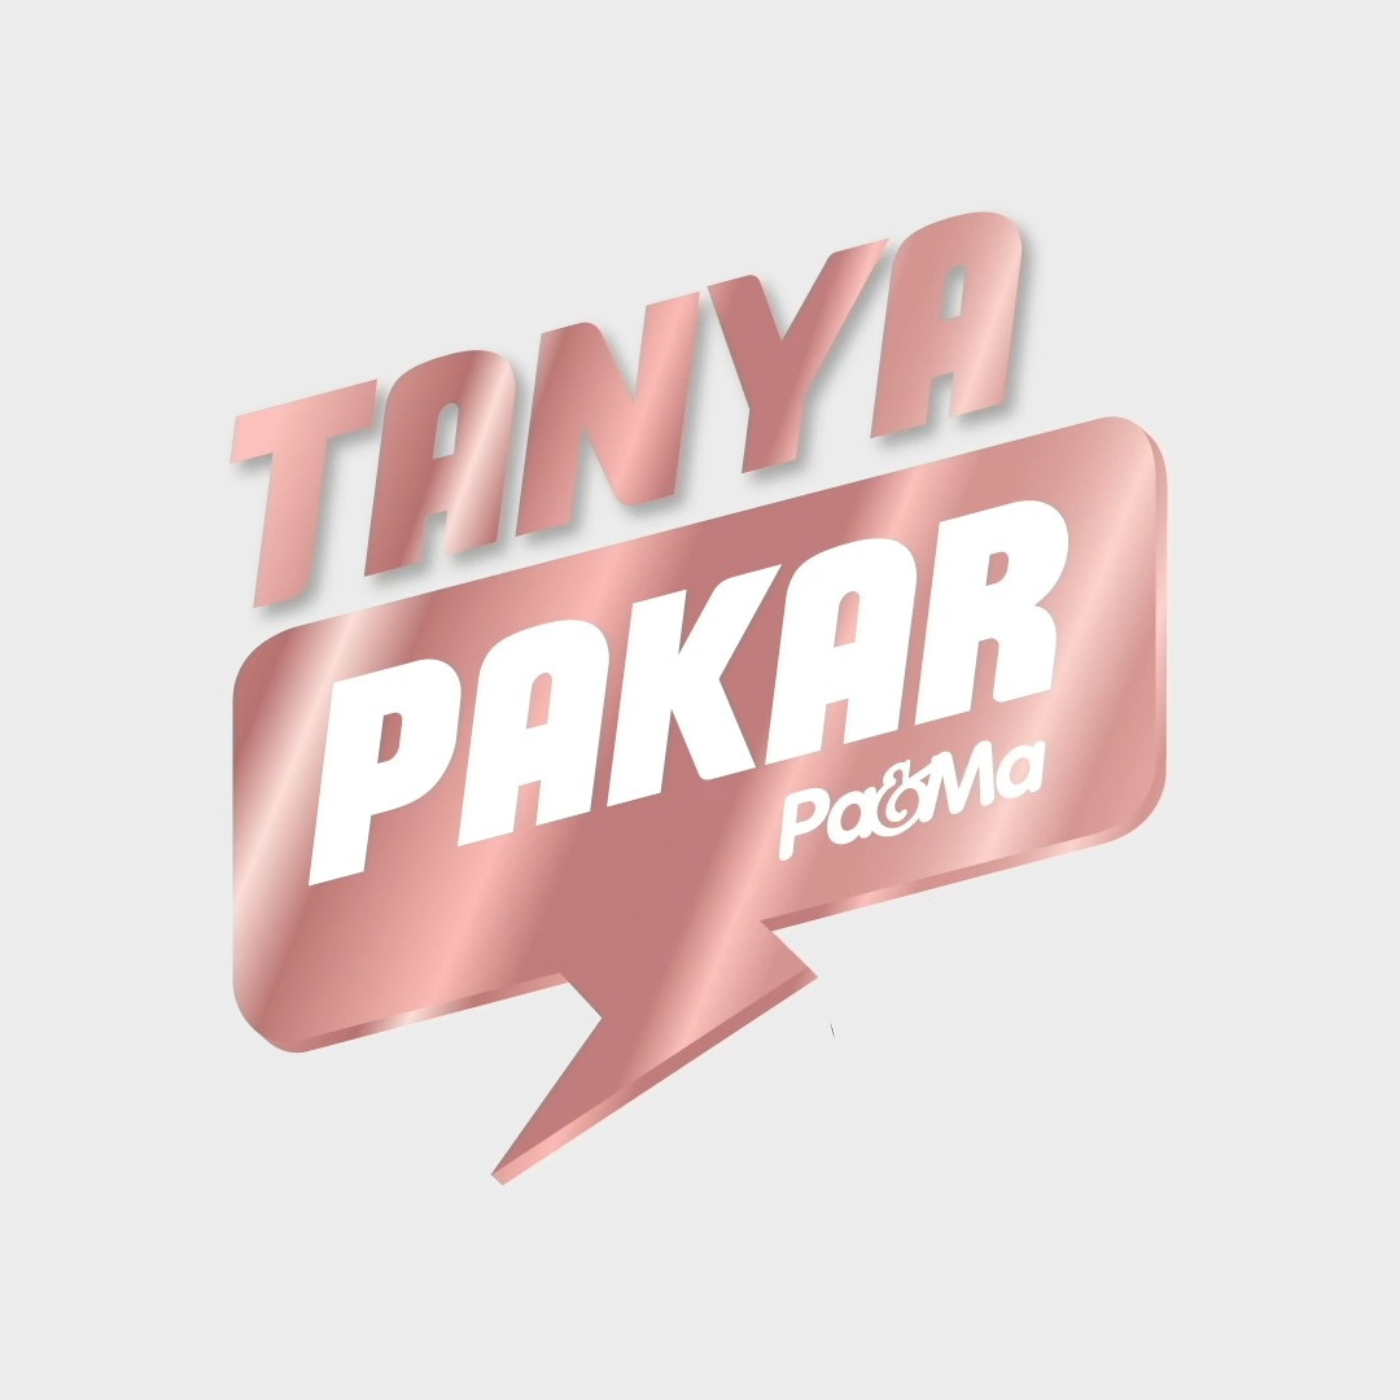 Tanya Pakar - SEENI Podcast [BM]